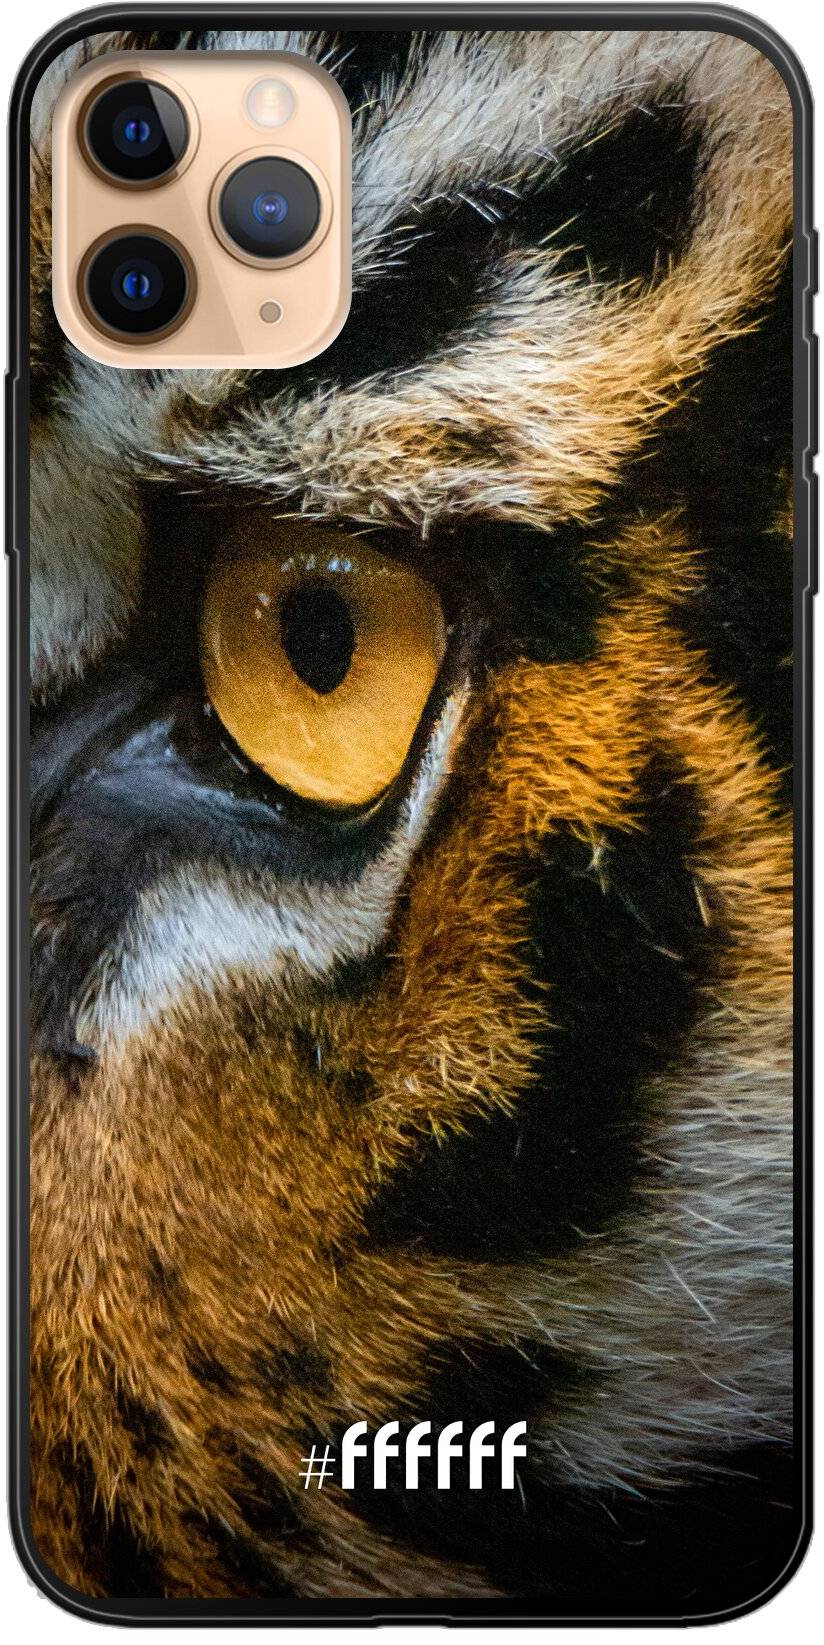 Tiger iPhone 11 Pro Max